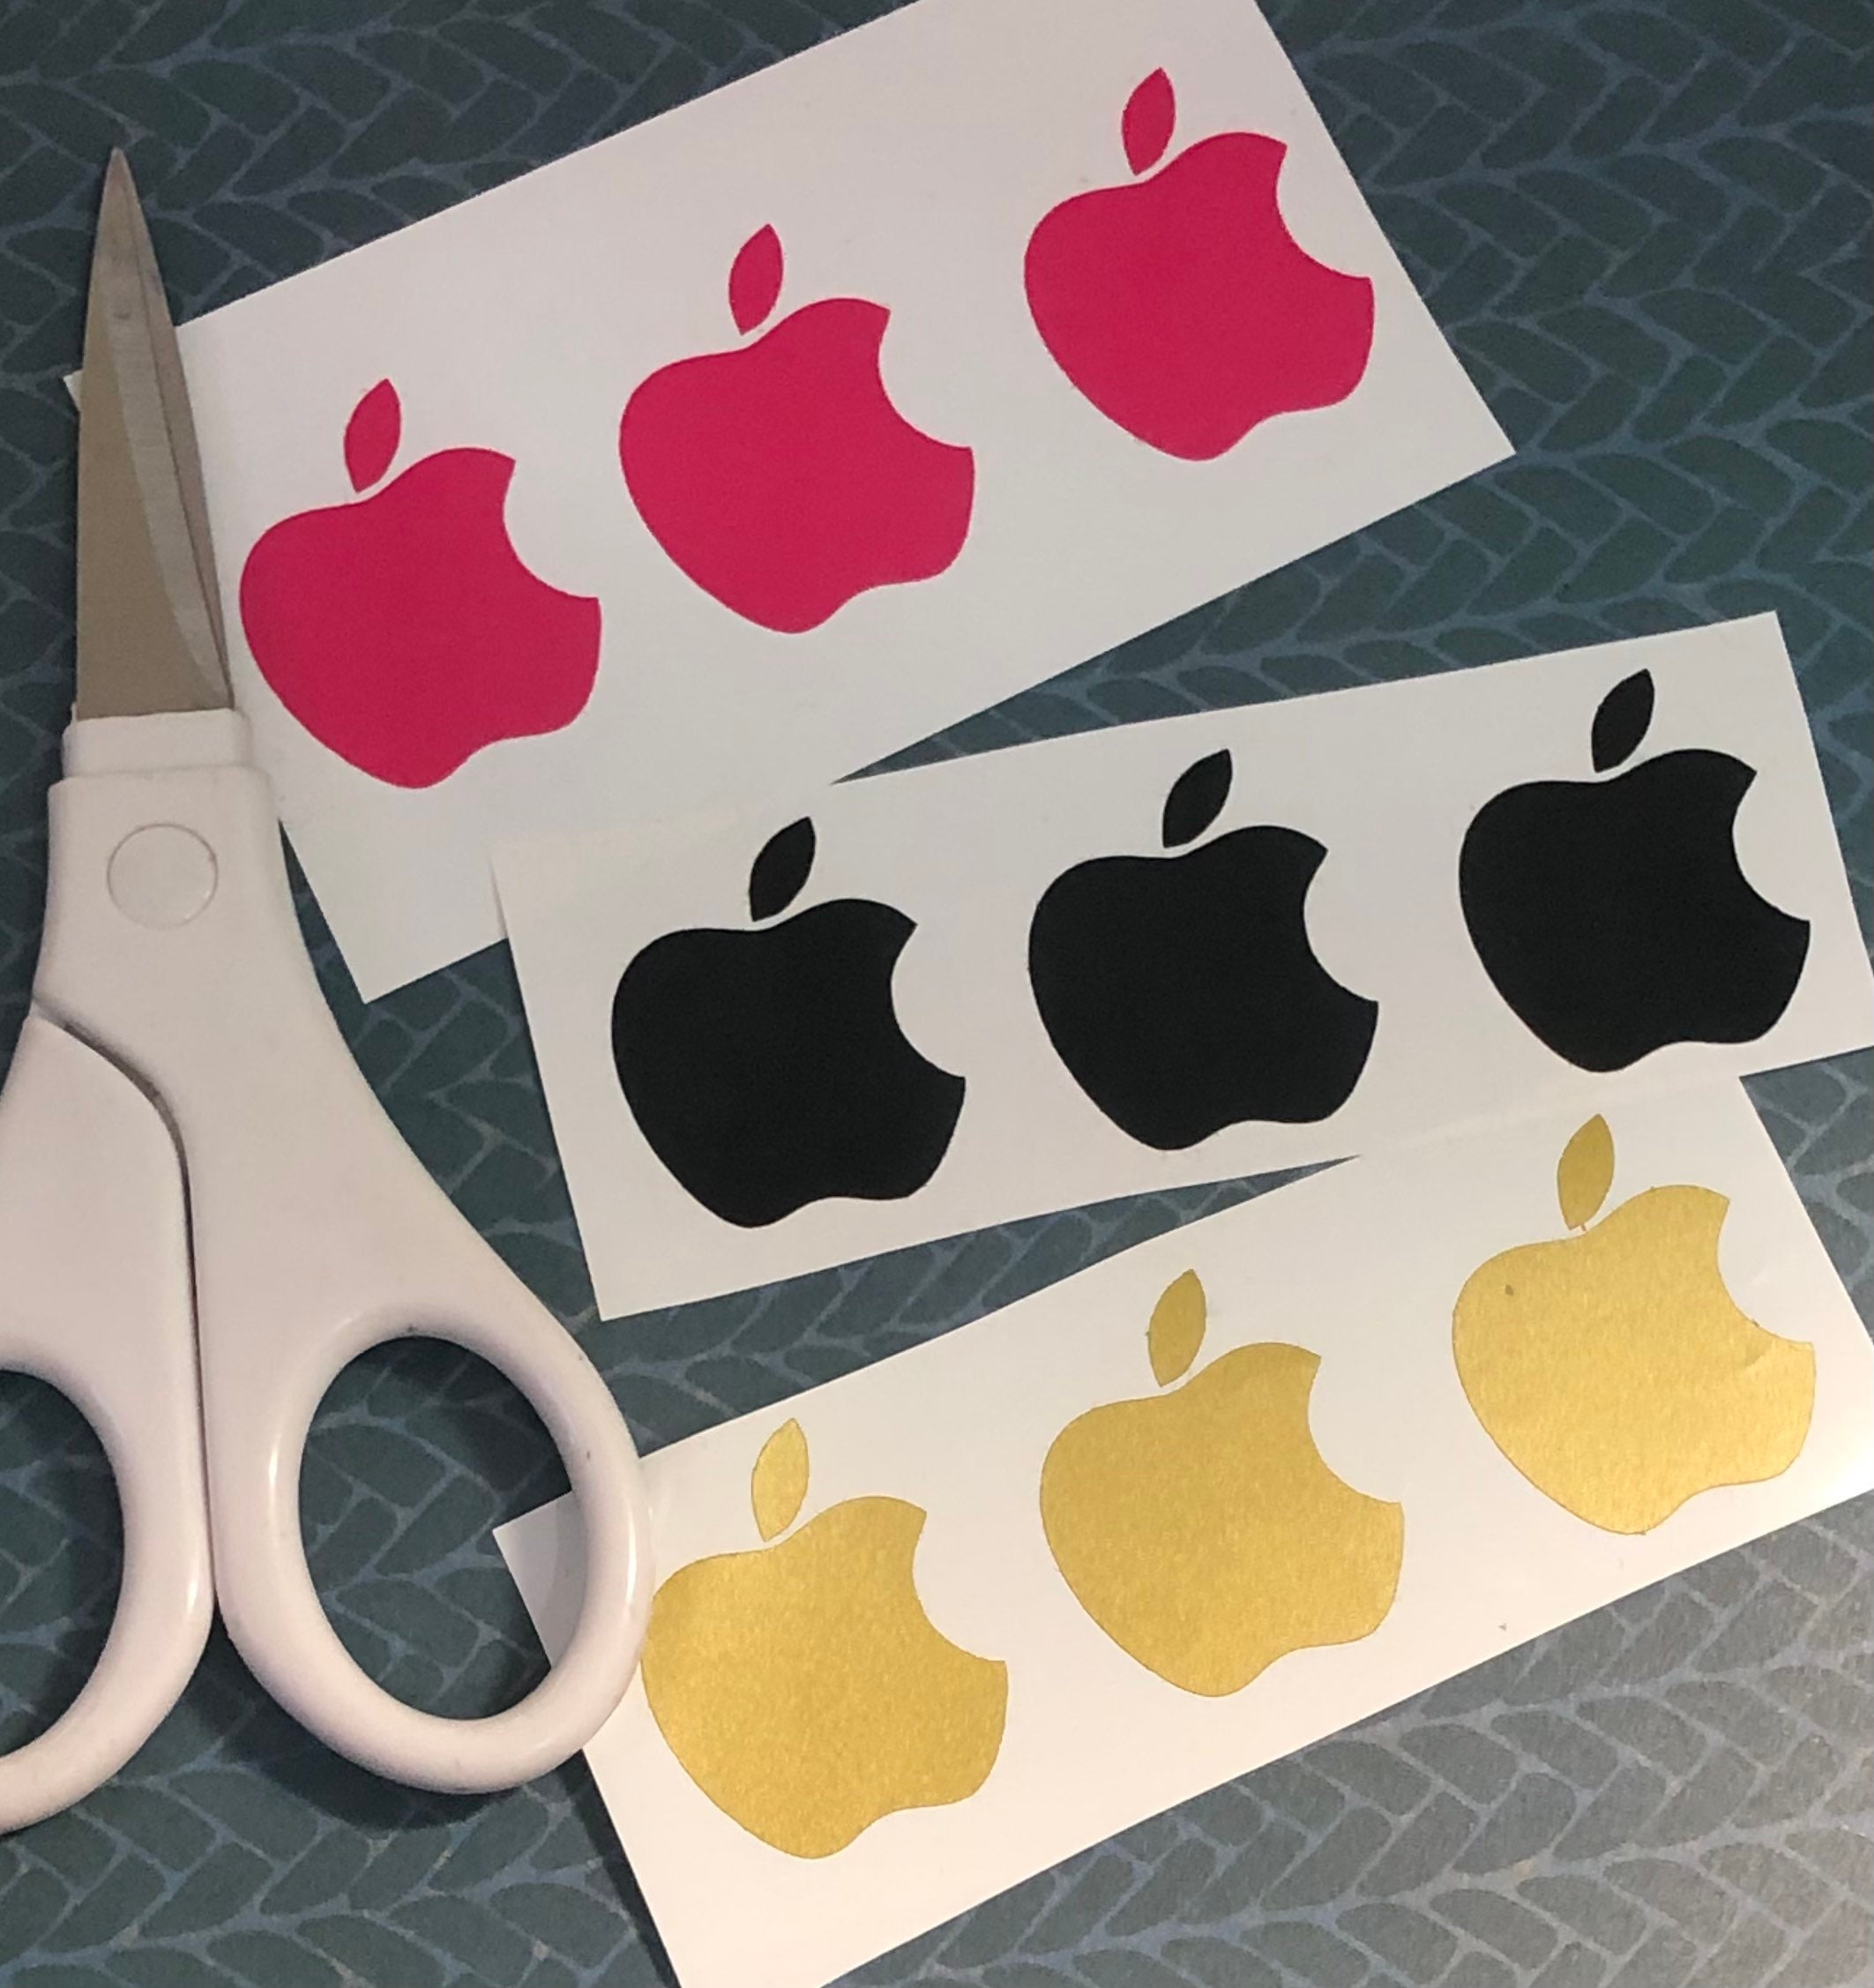 Autocollants logo Apple 2x2 original - MAC OS REPARATIONS